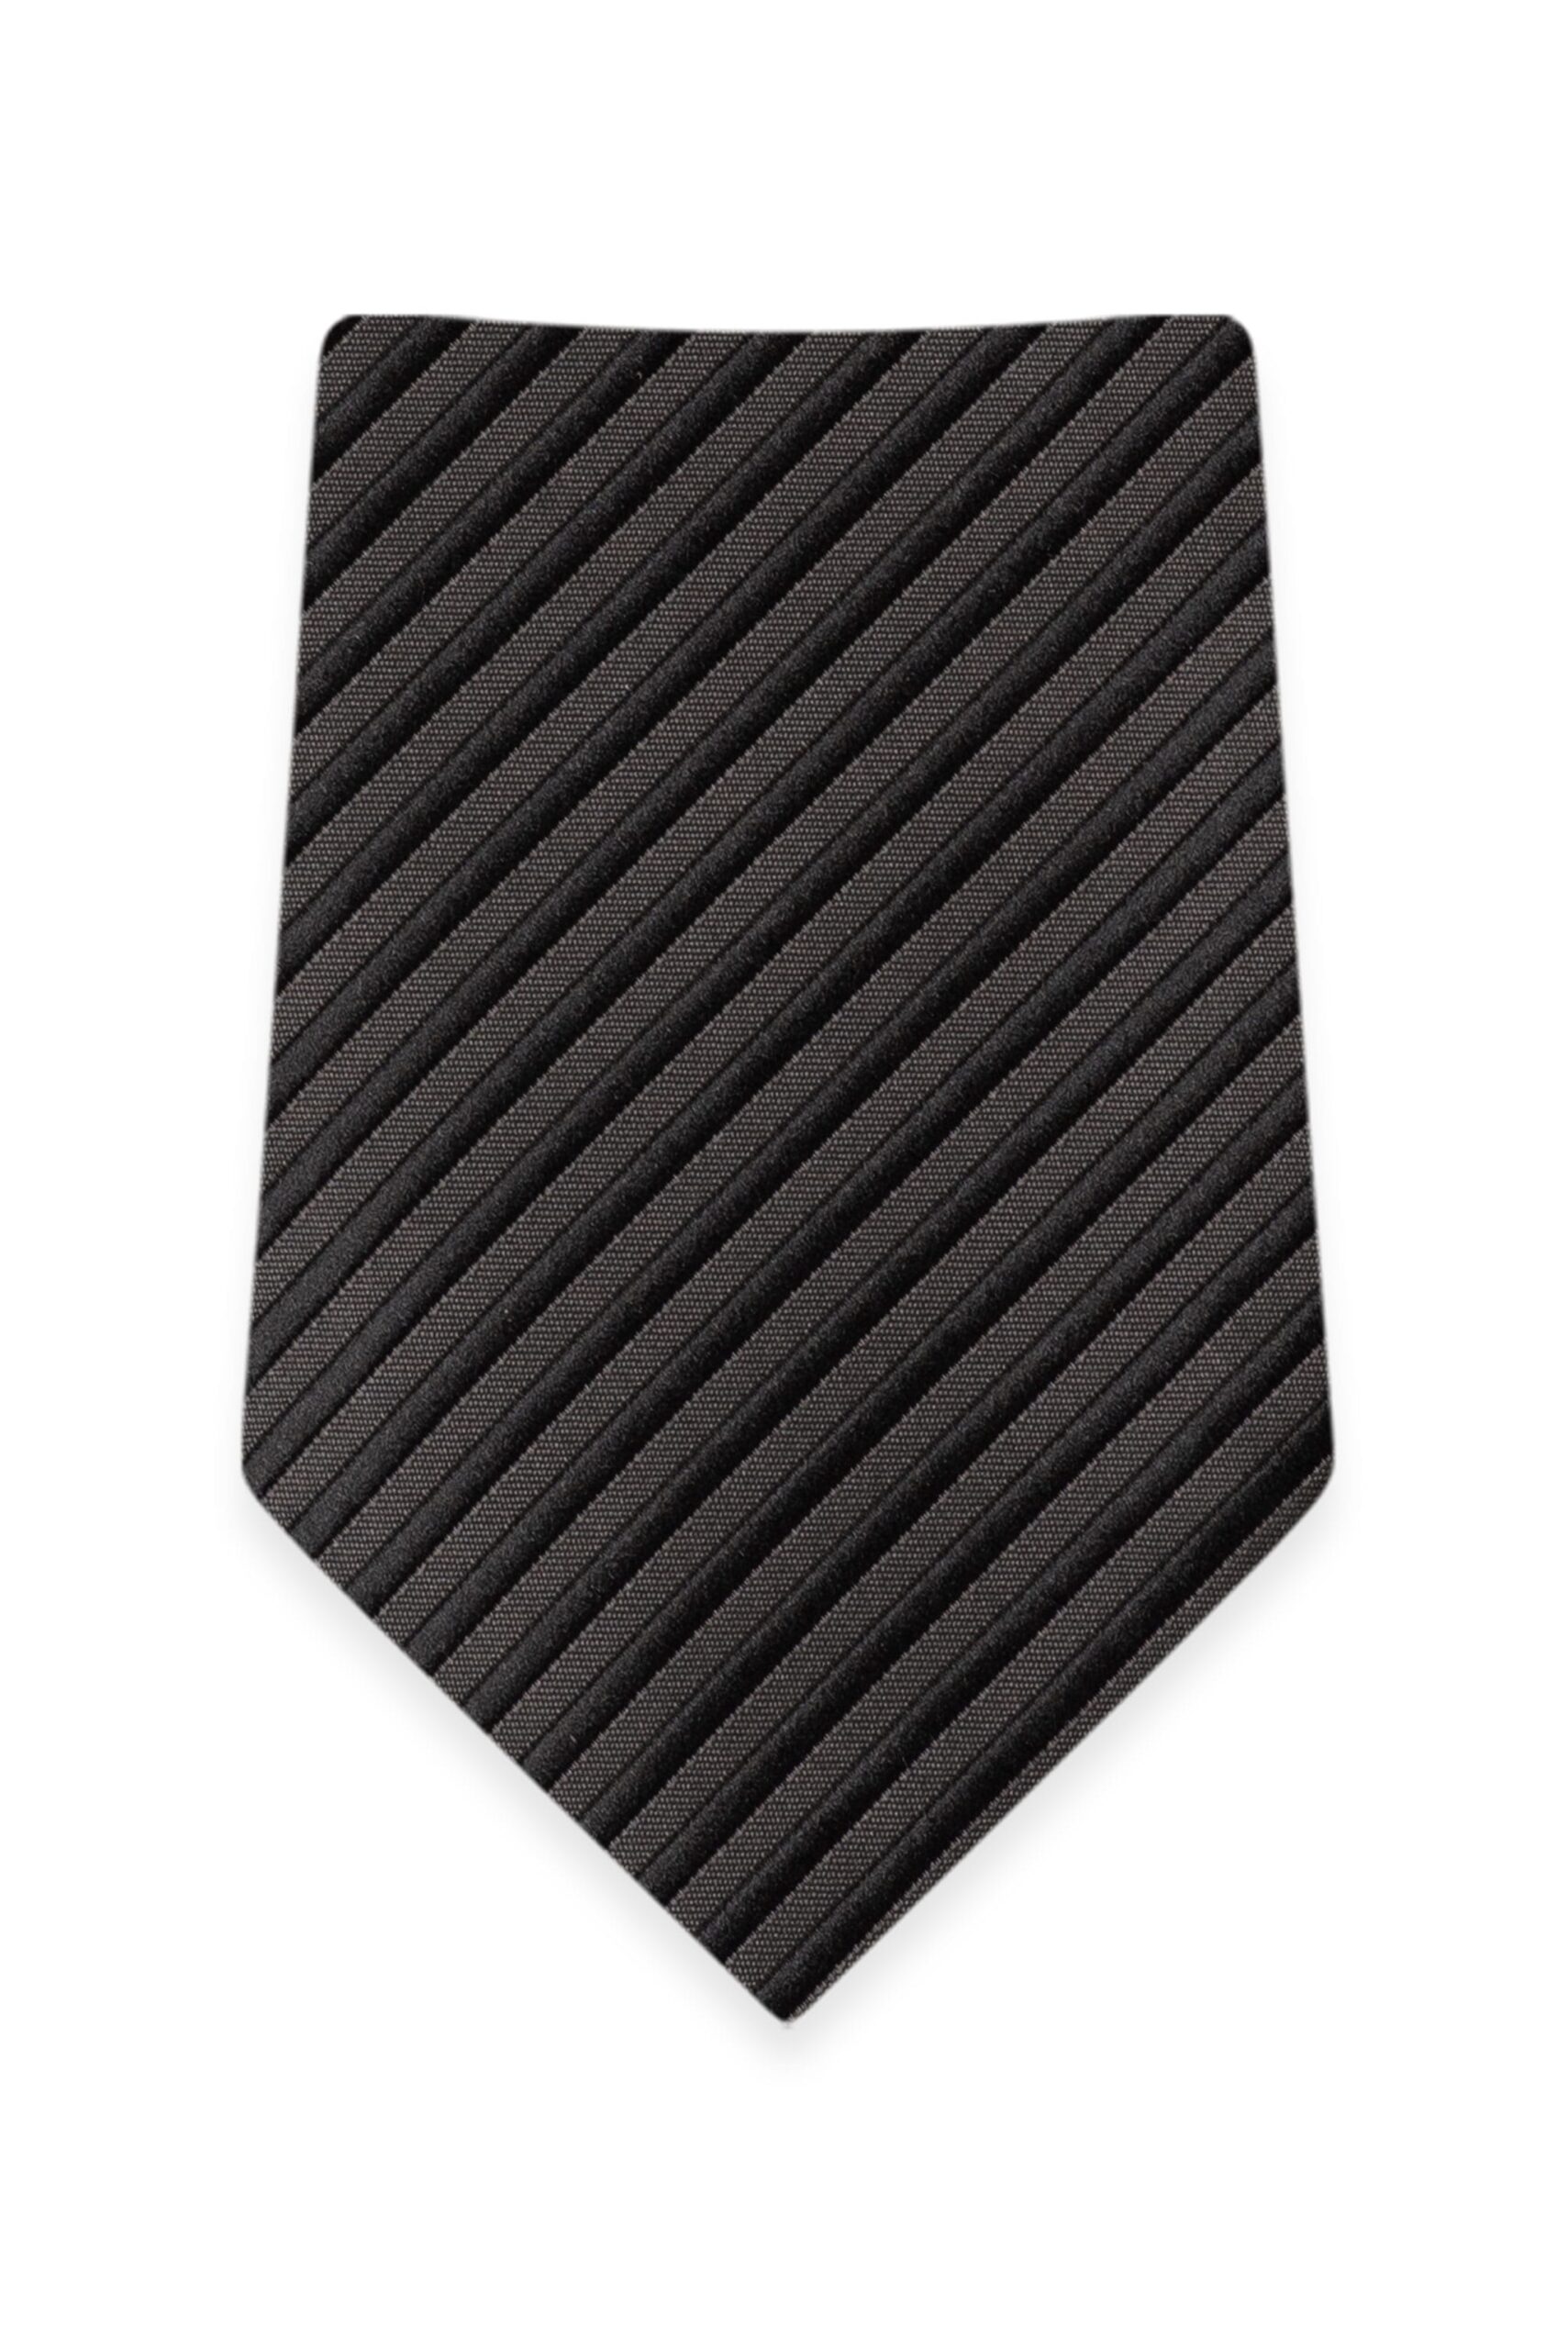 Striped Black Self-Tie Windsor Tie